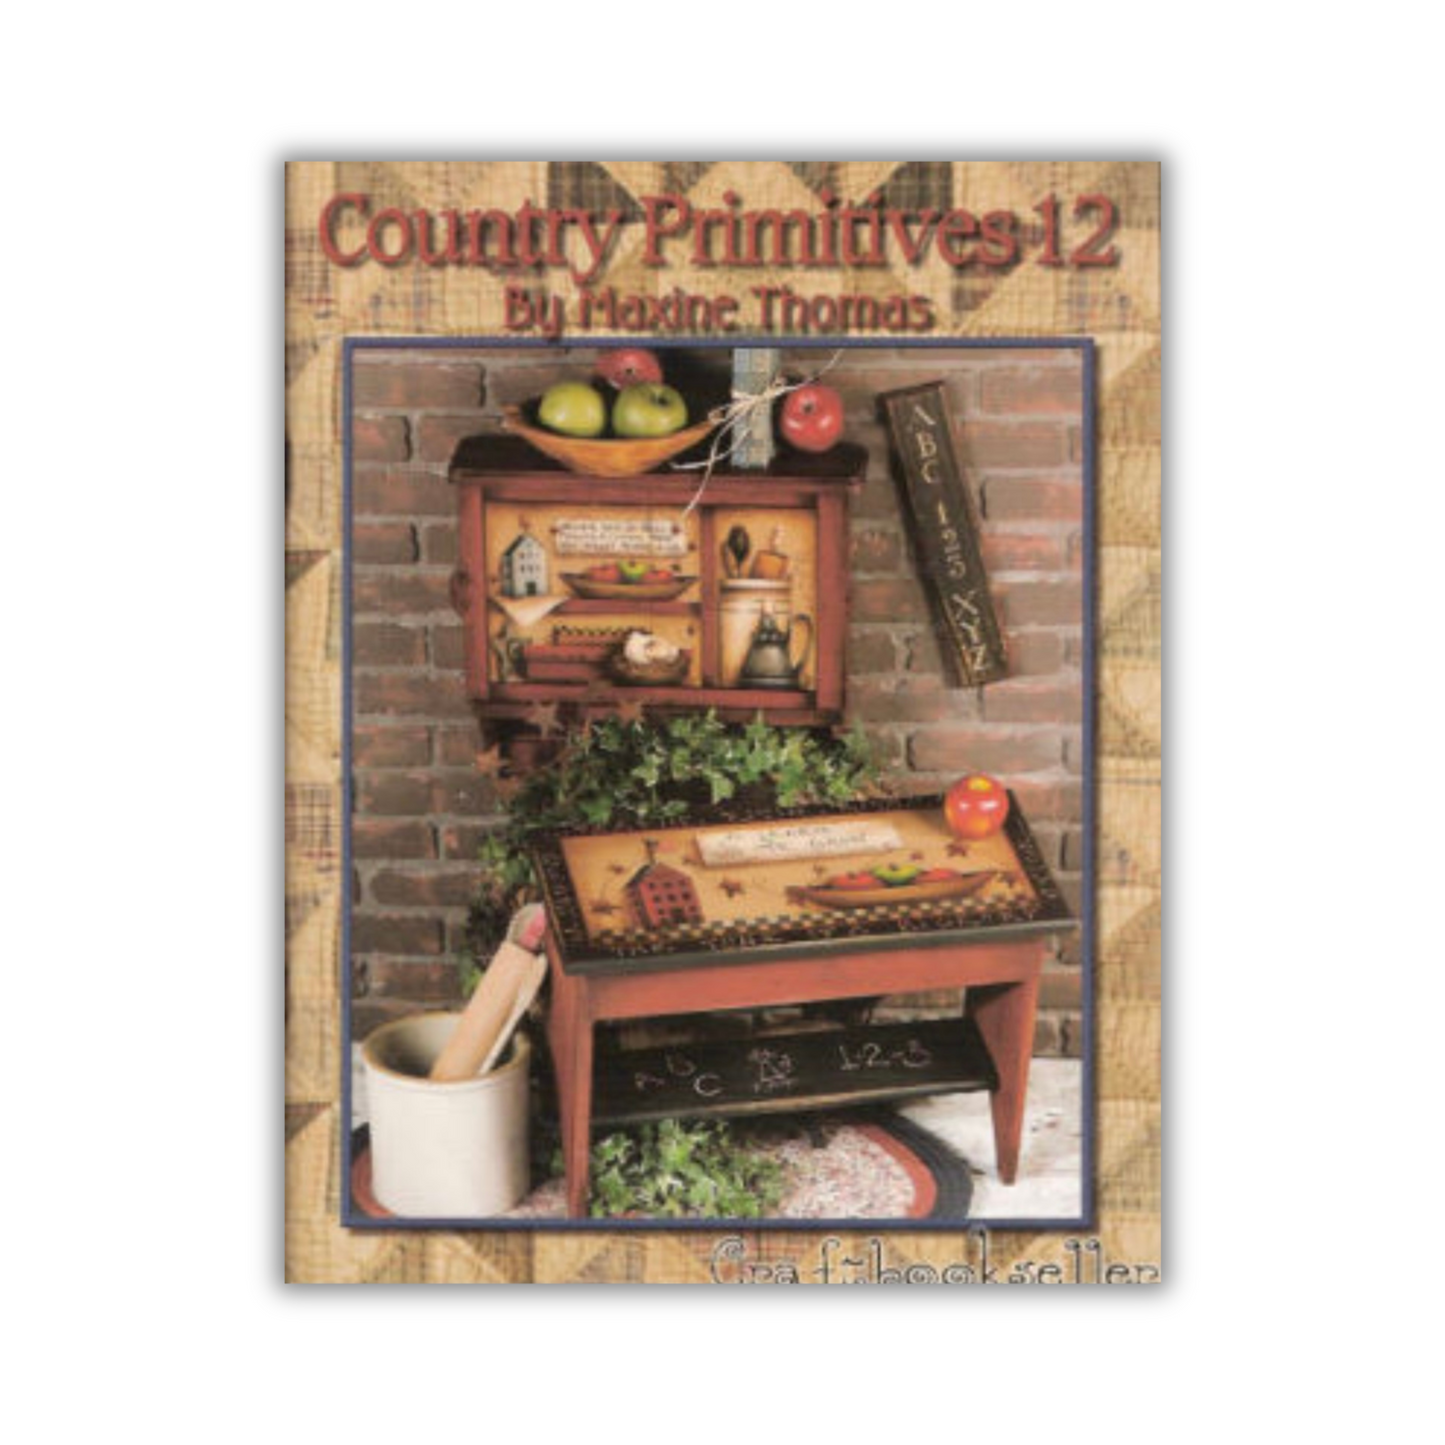 Libro Country primitives vol 12 Maxine Thomas ( Buone condizioni) Out of the Wood